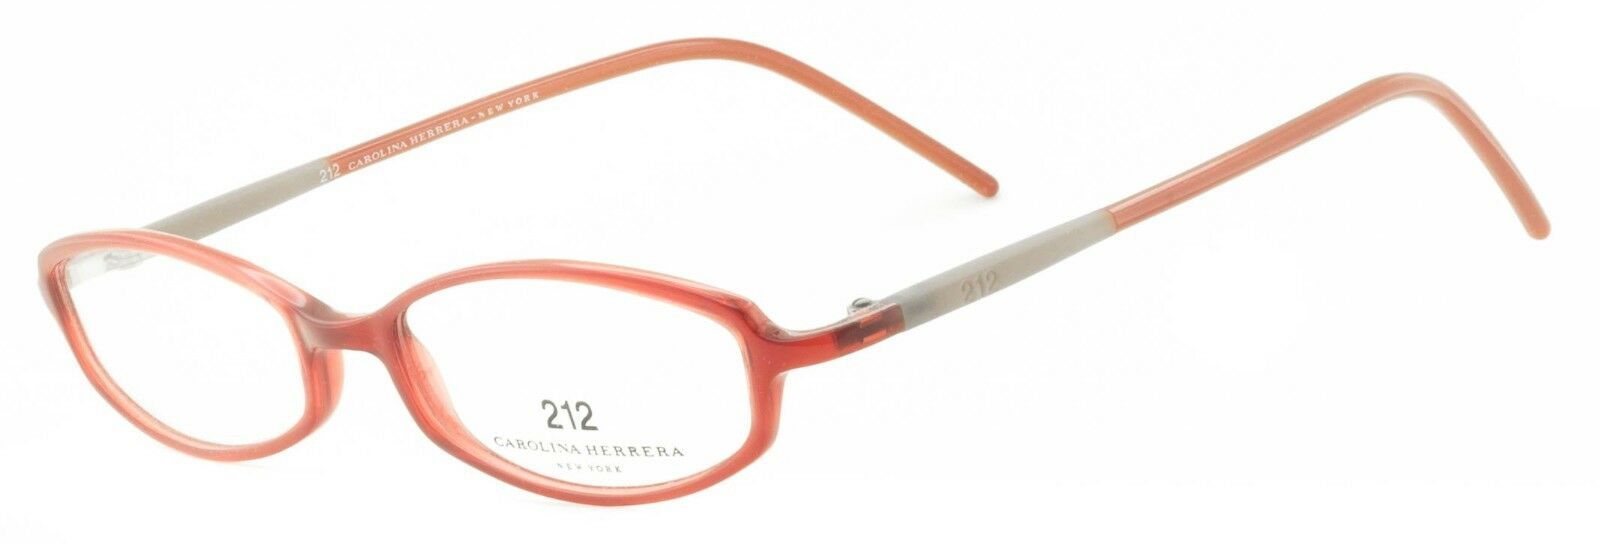 CAROLINA HERRERA CH 212 2535 CA 1224 RX Optical FRAMES NEW Glasses Eyewear-BNIB